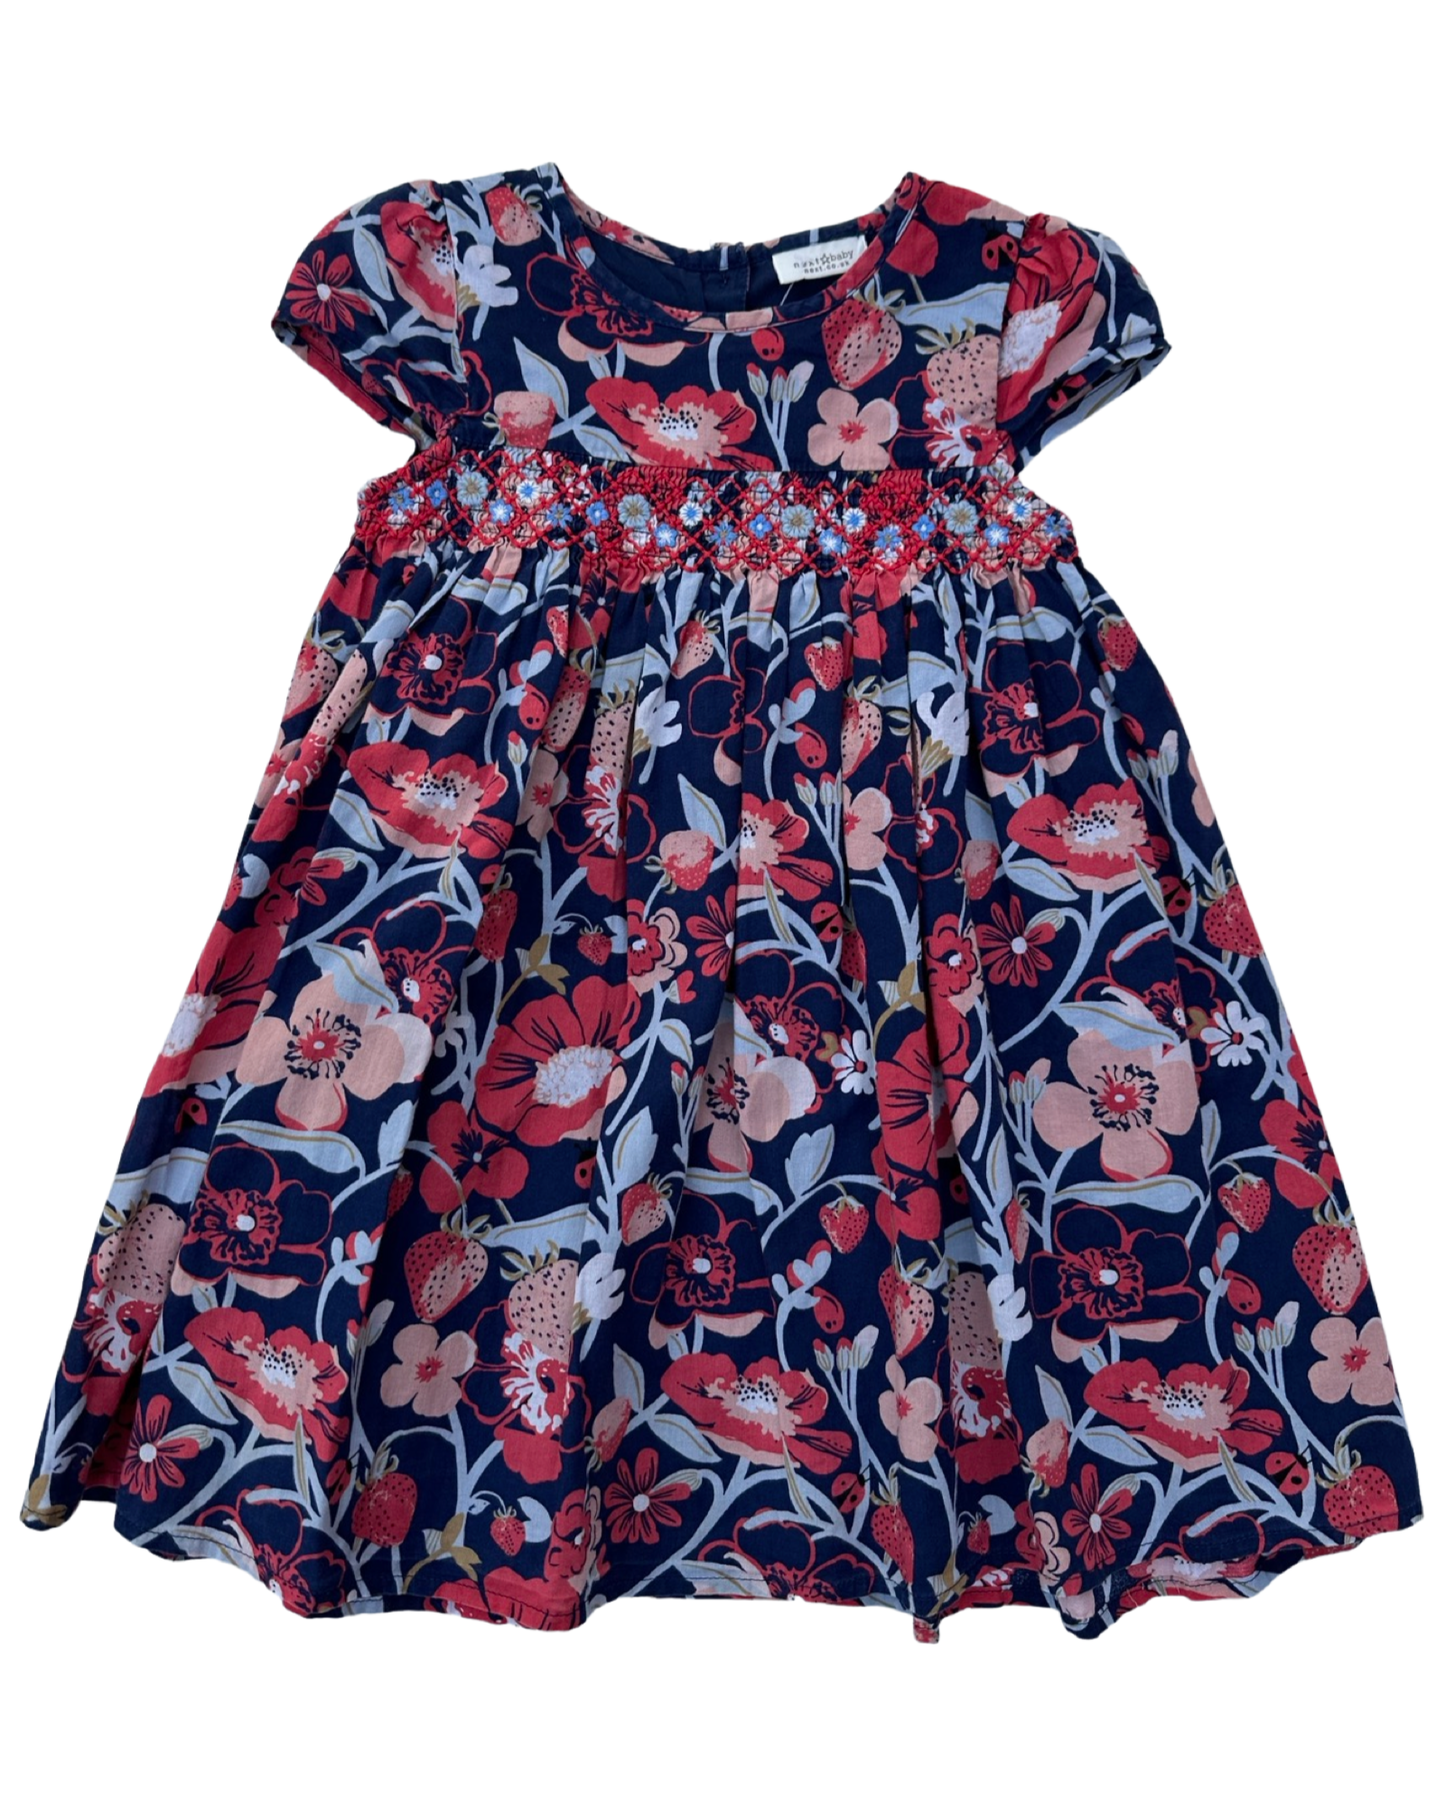 Next poppy print dress (size 18-24mths)